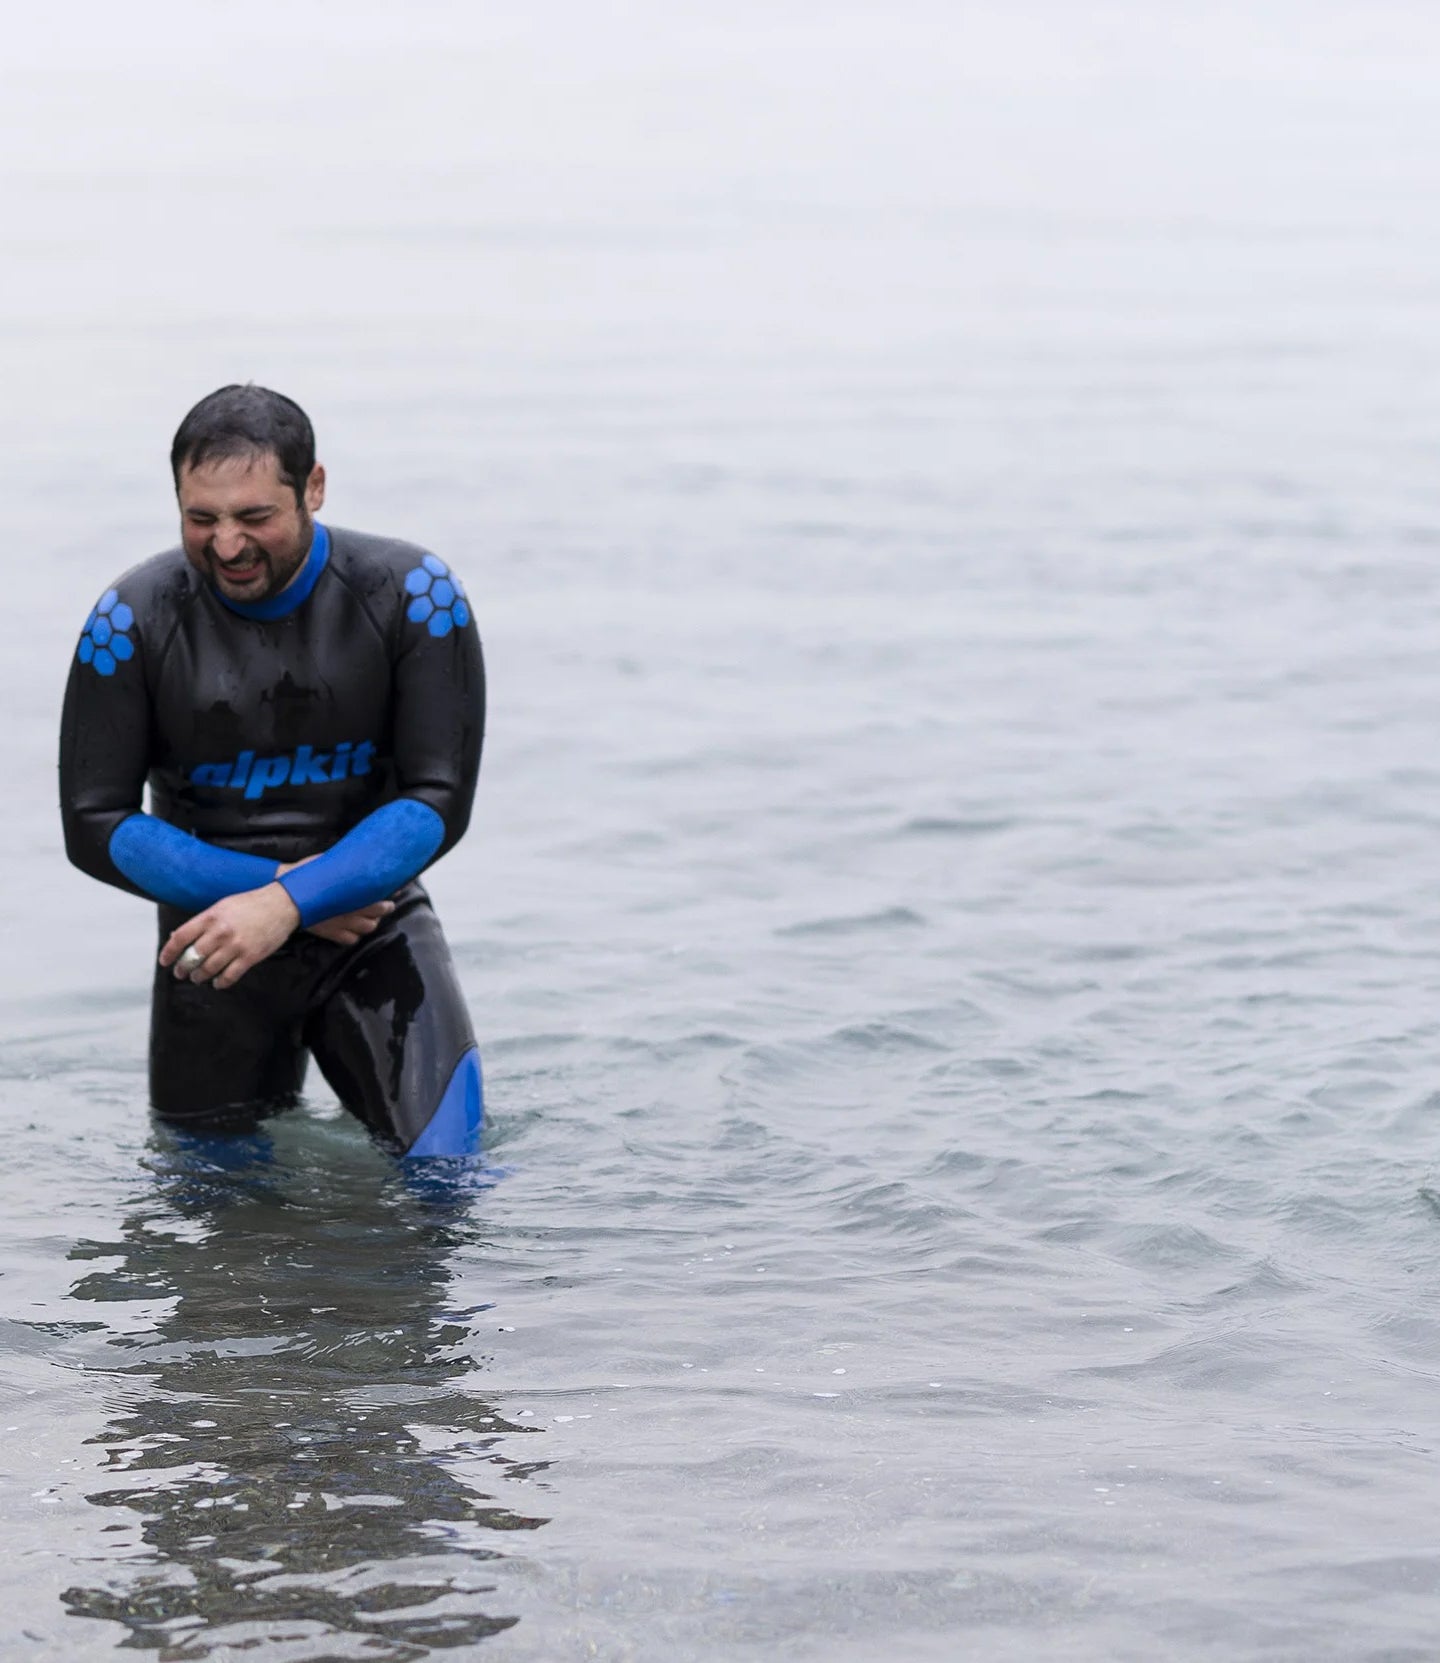 Generic Neoprene 1.5mm Men Wetsuit Scuba Diving Suit Swimwear For